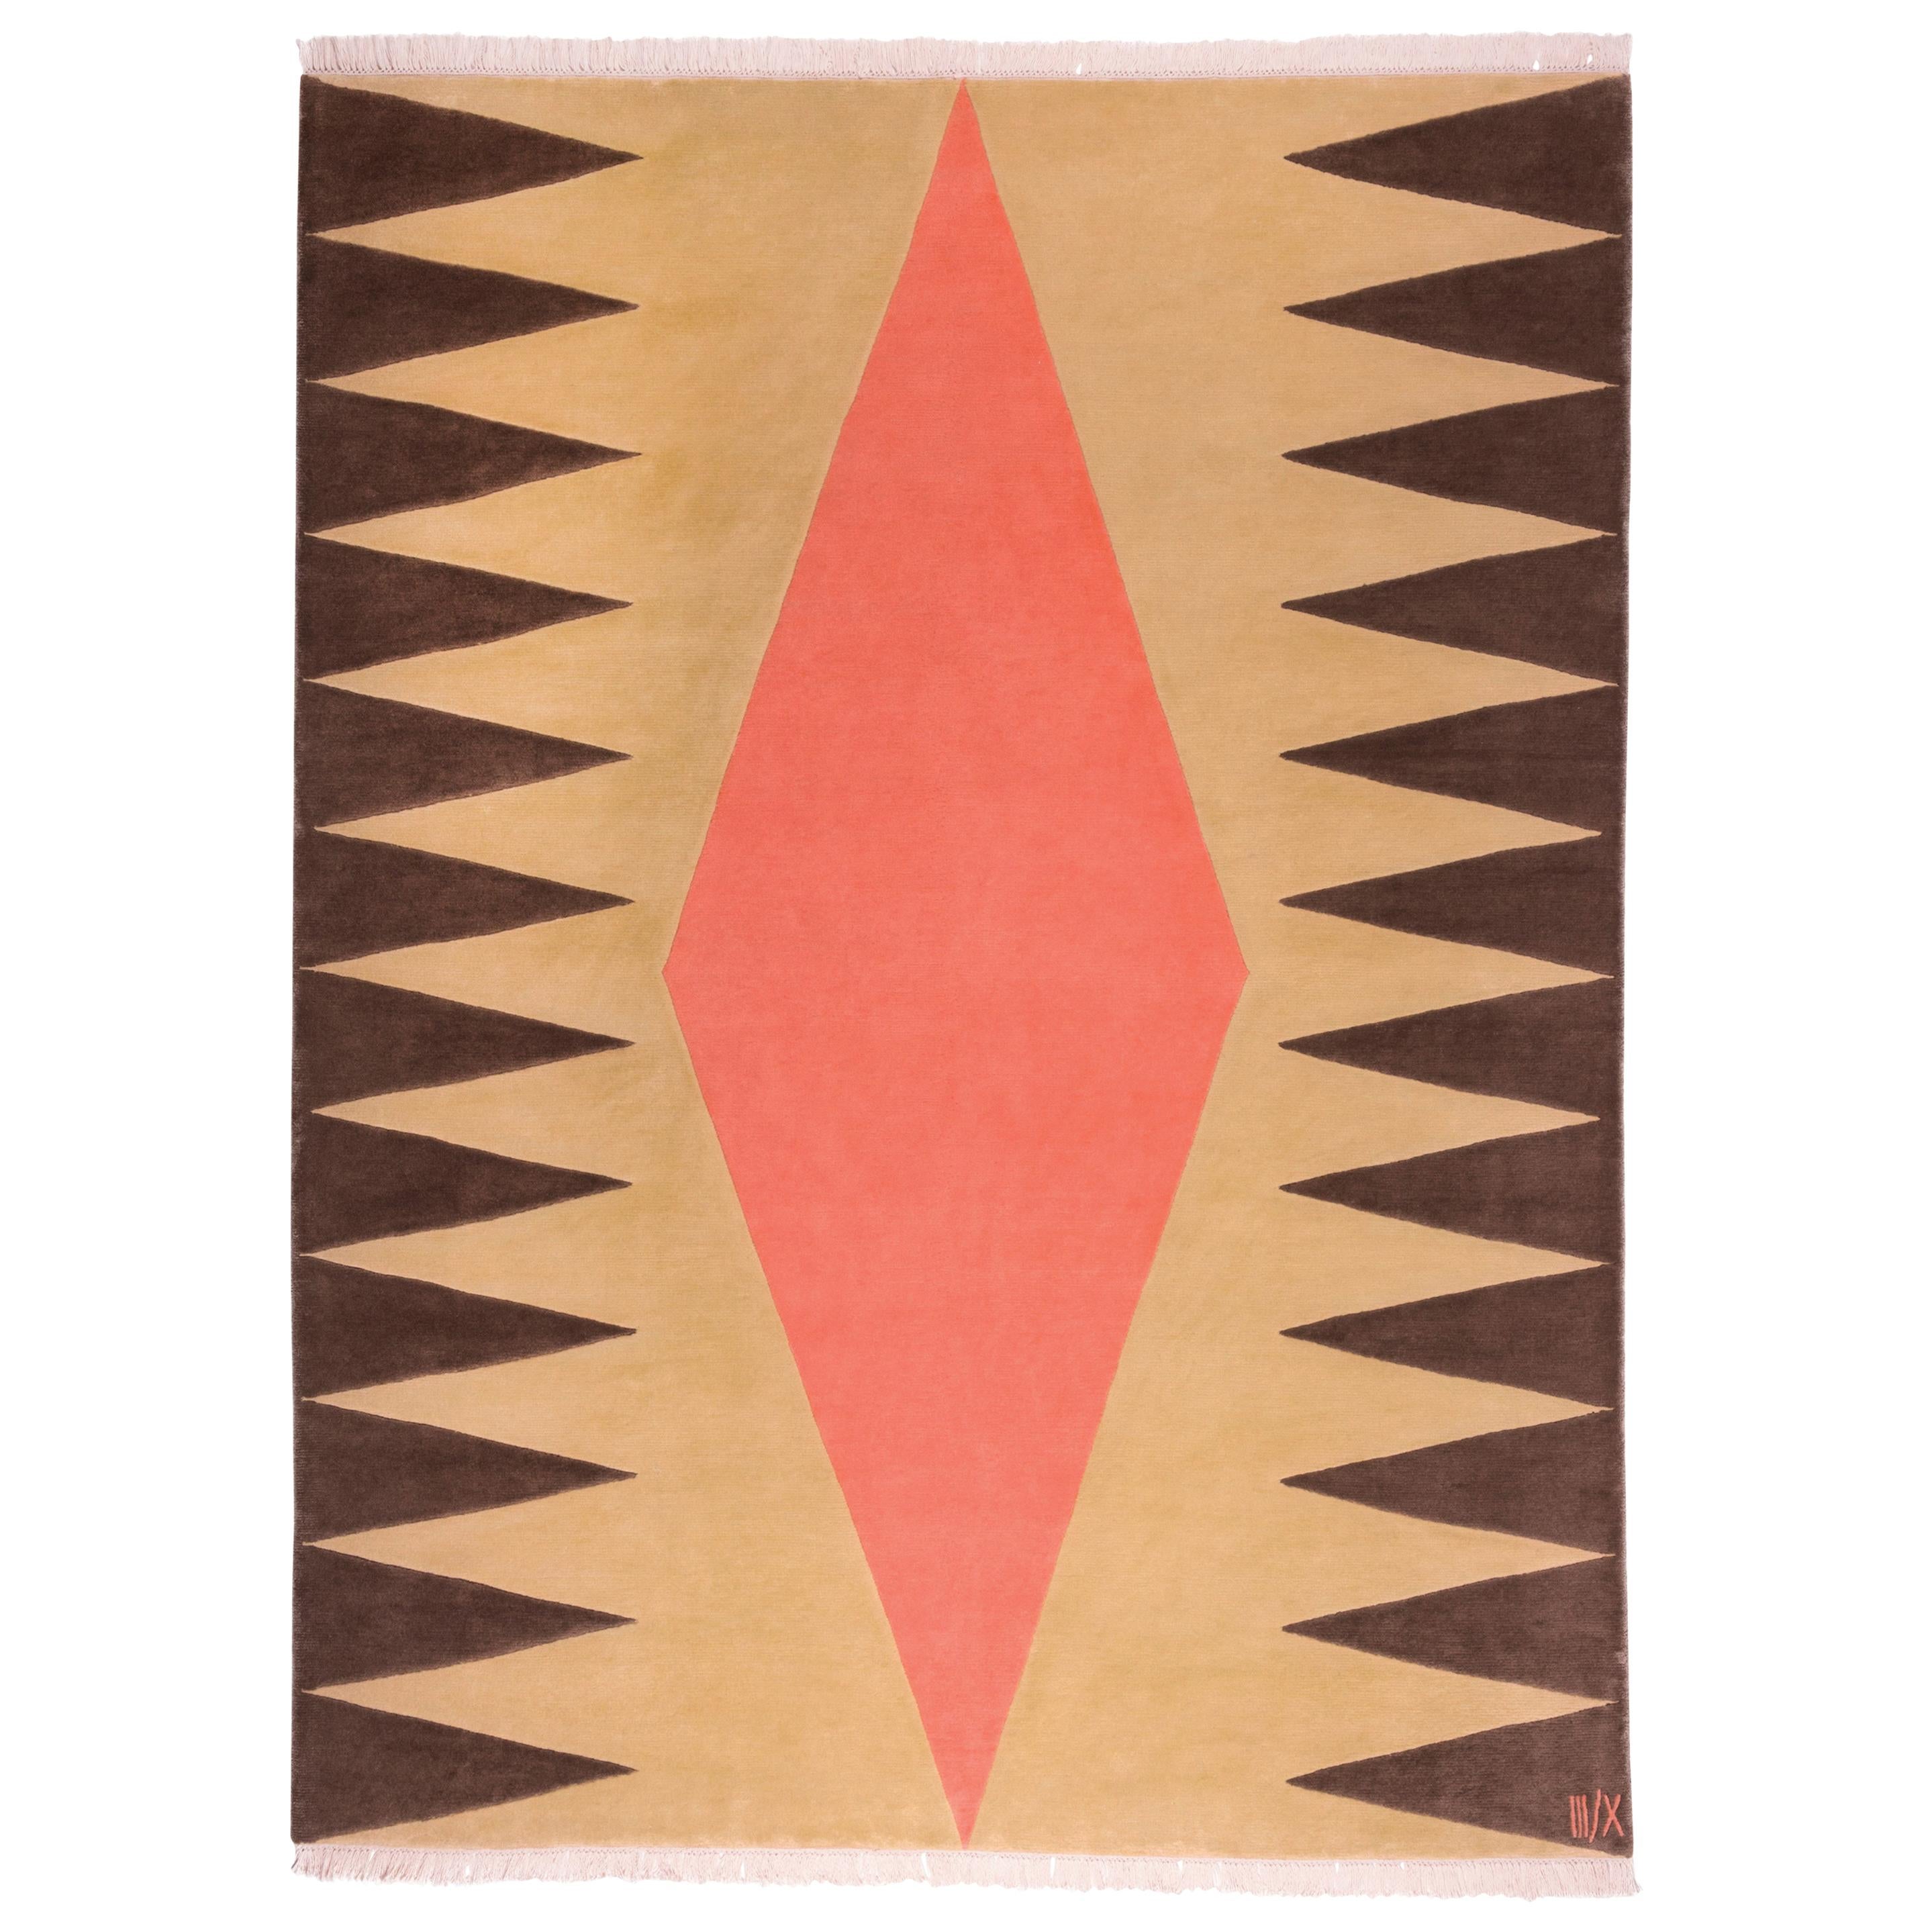 Rug Interior Orange - Geometric Beige Peach Brown Wool Patterns by Carpets CC 